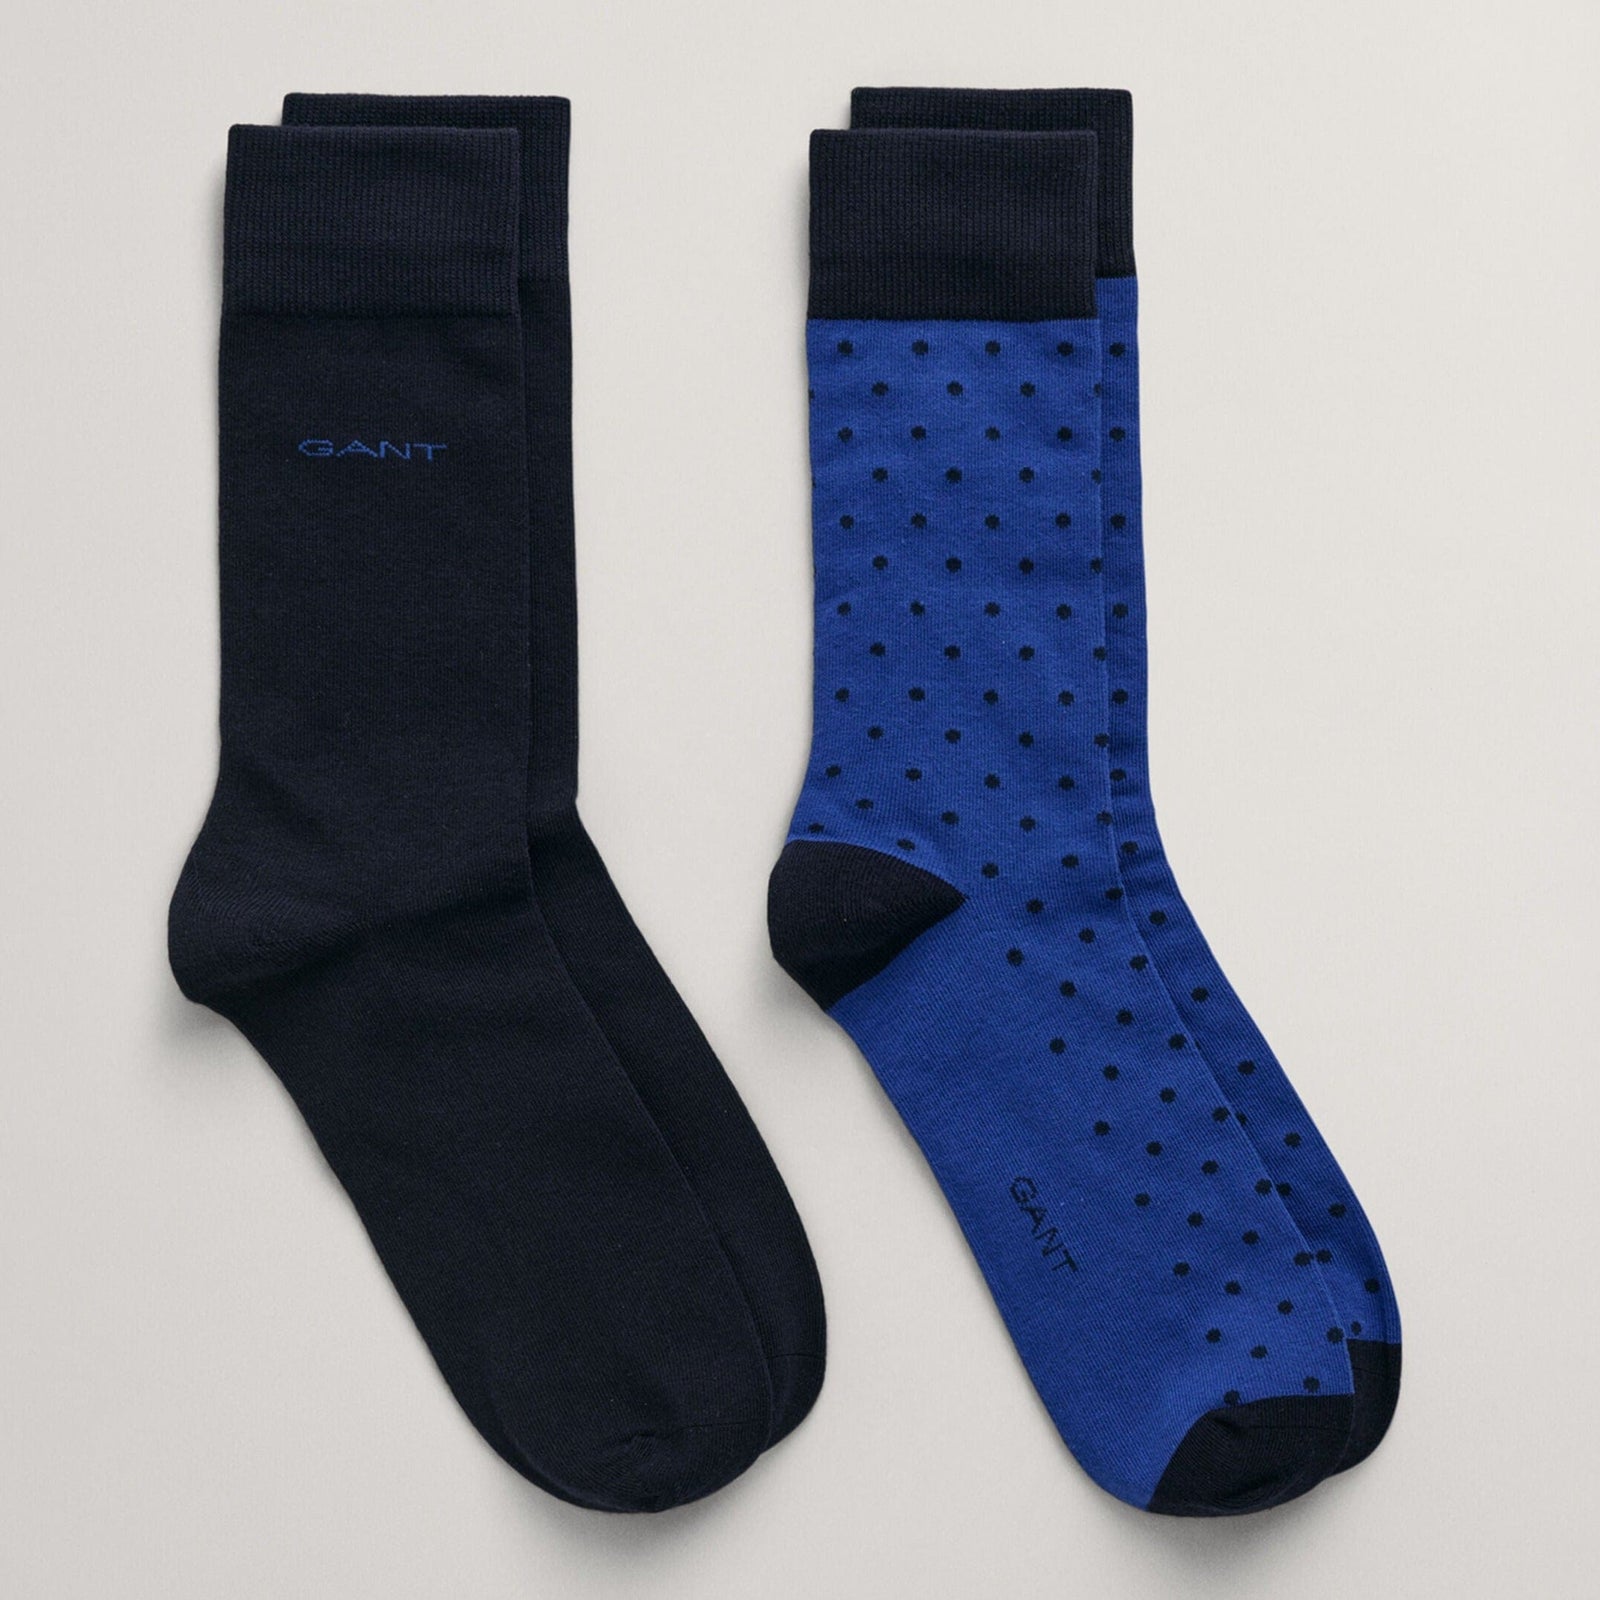 Gant 2-Pack Dot & Solid Socks in College Blue